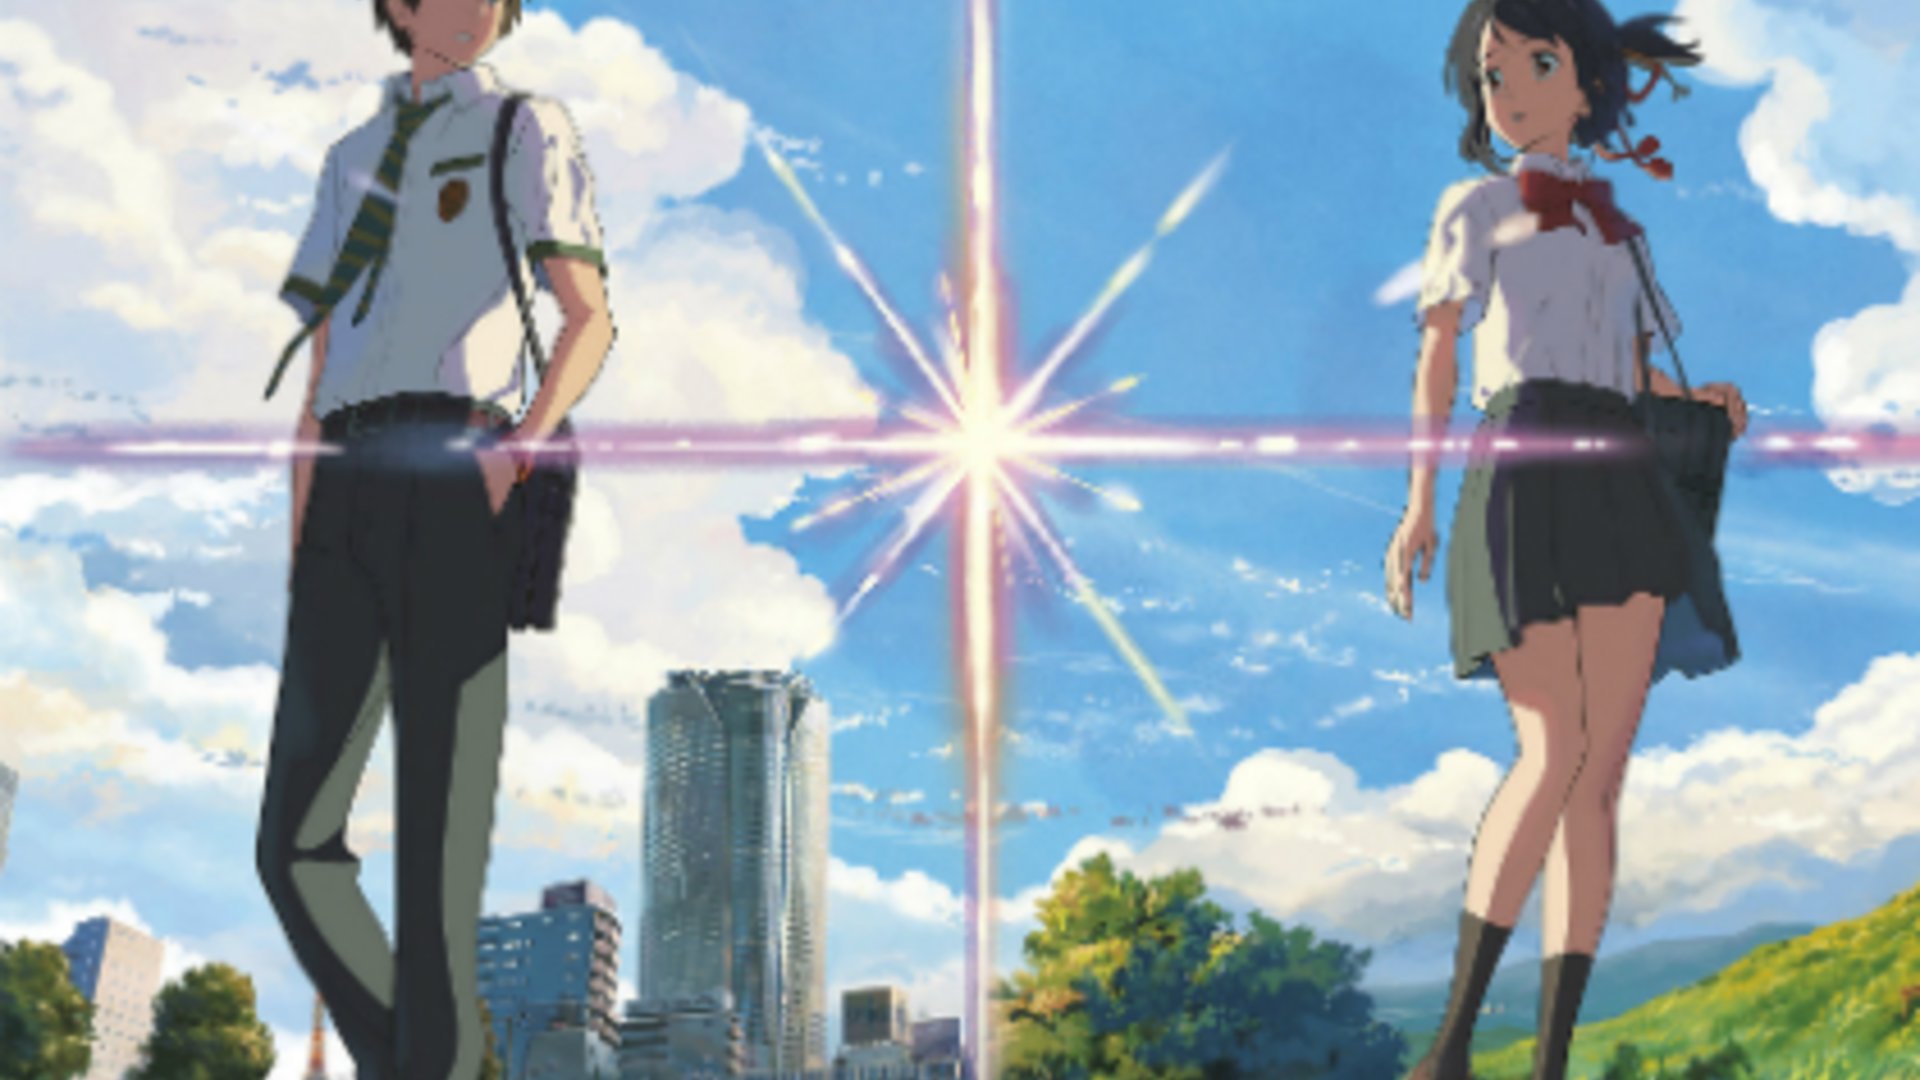 Netflix holt zwei Anime-Serien ins Programm zurück